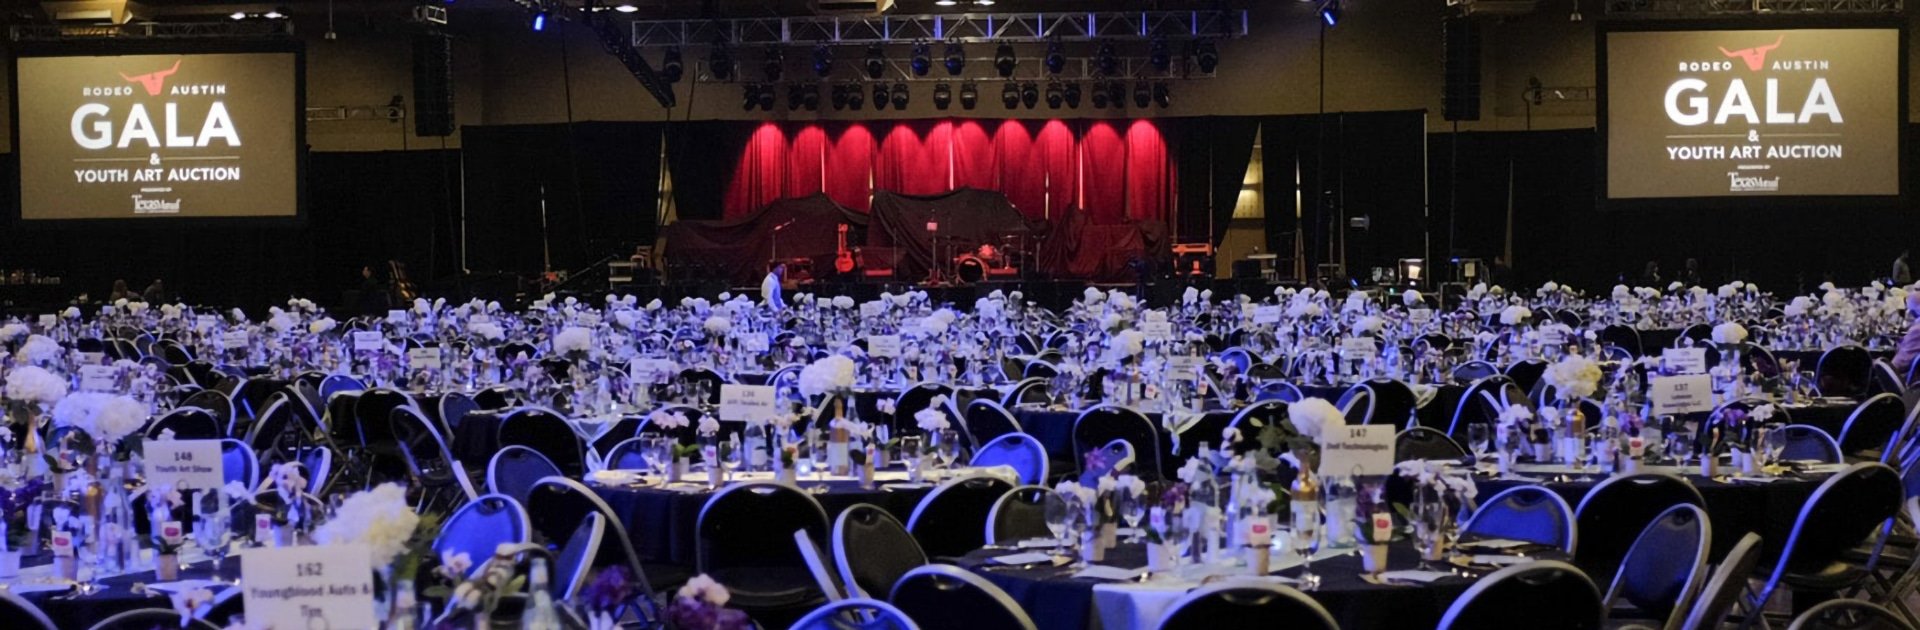 2020 Rodeo Austin Gala banquet room